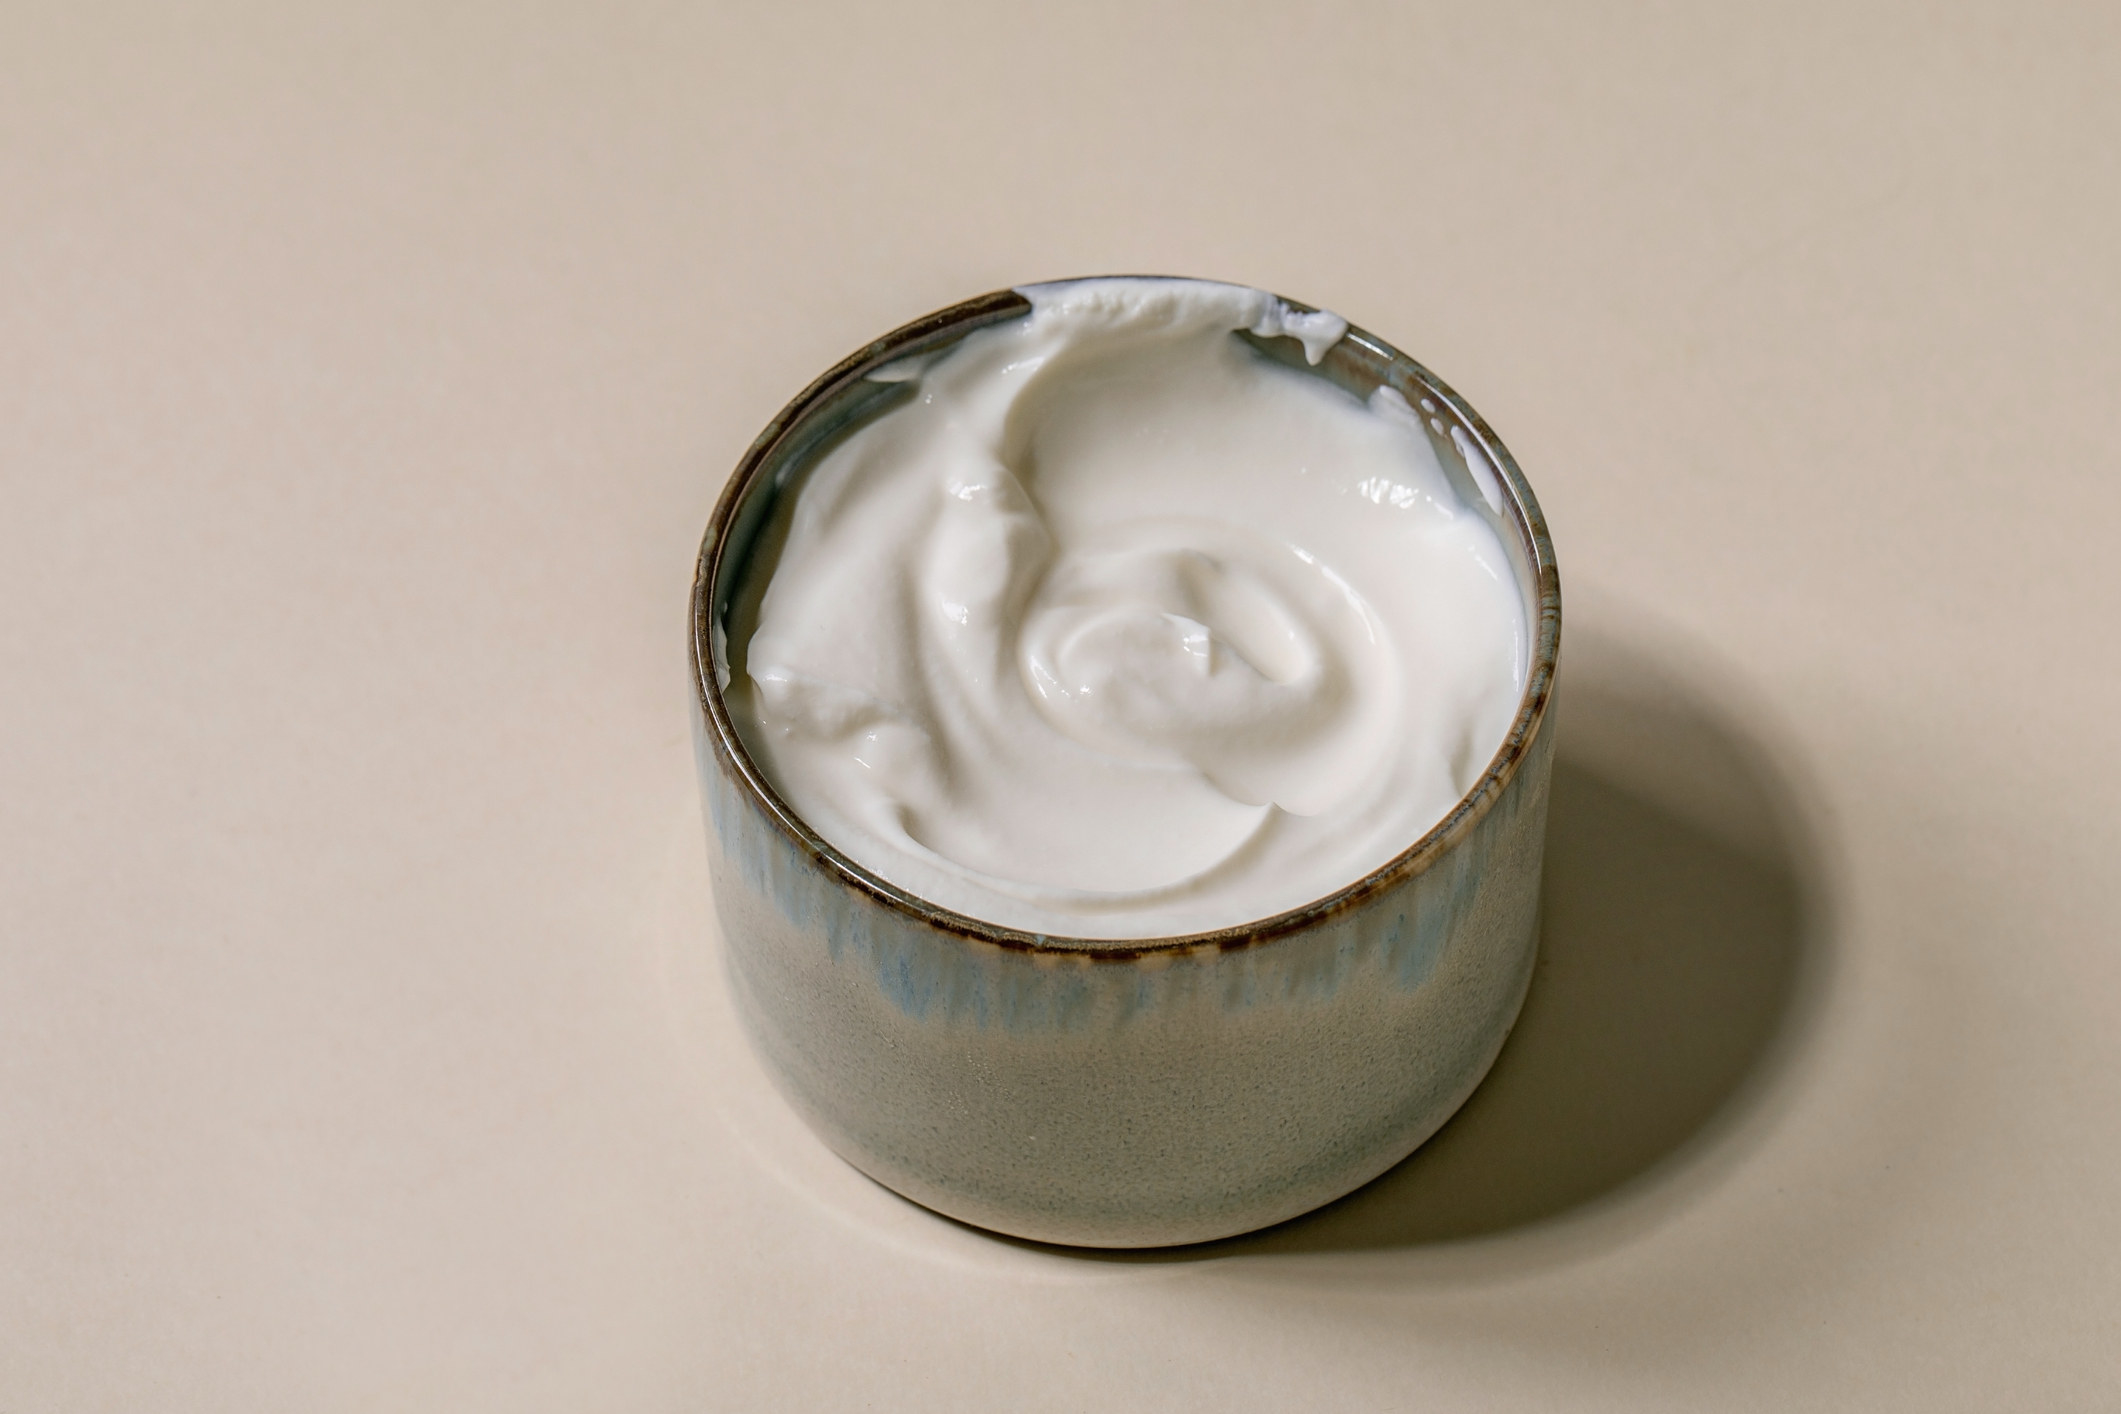 A small tub of sour cream